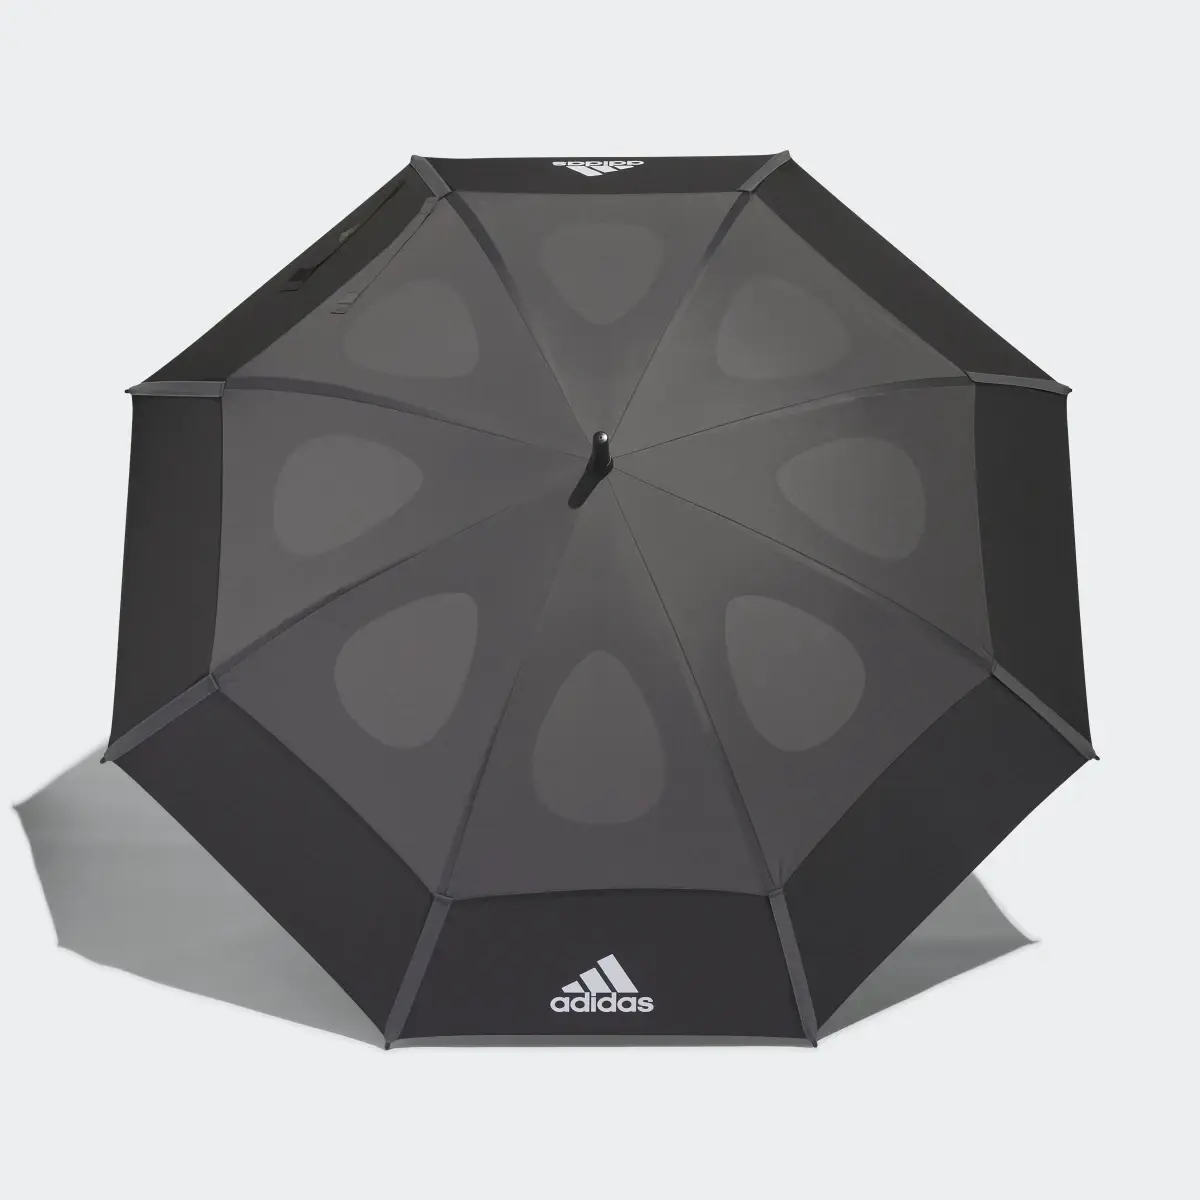 Adidas Double Canopy Golf Umbrella 64". 2